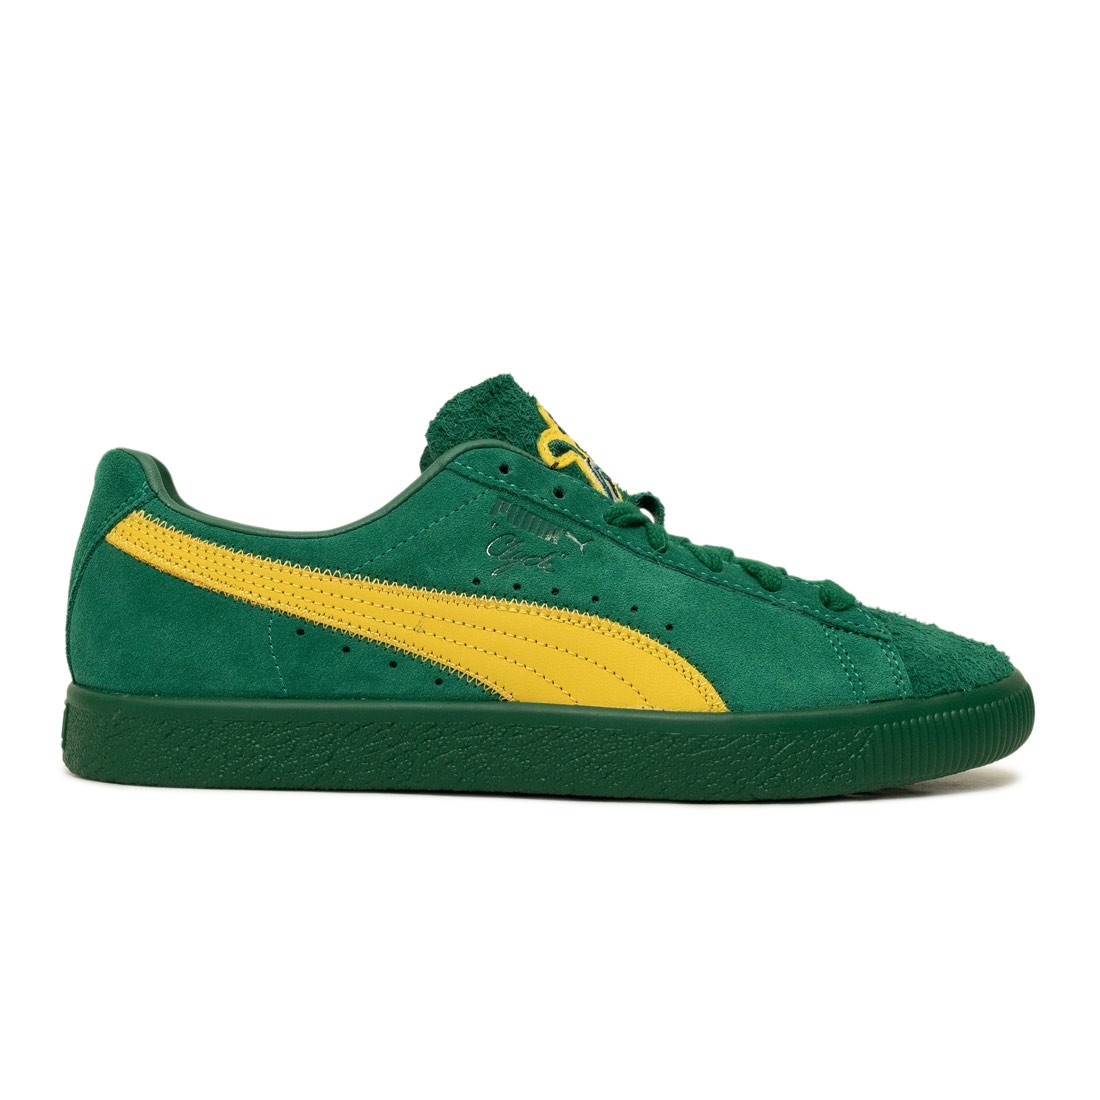 Buy Puma Men's InCycle Flipped Ball Brasil OG Medium Green and Vibrant  Yellow Sneakers - 10 UK/India (44.5 EU) at